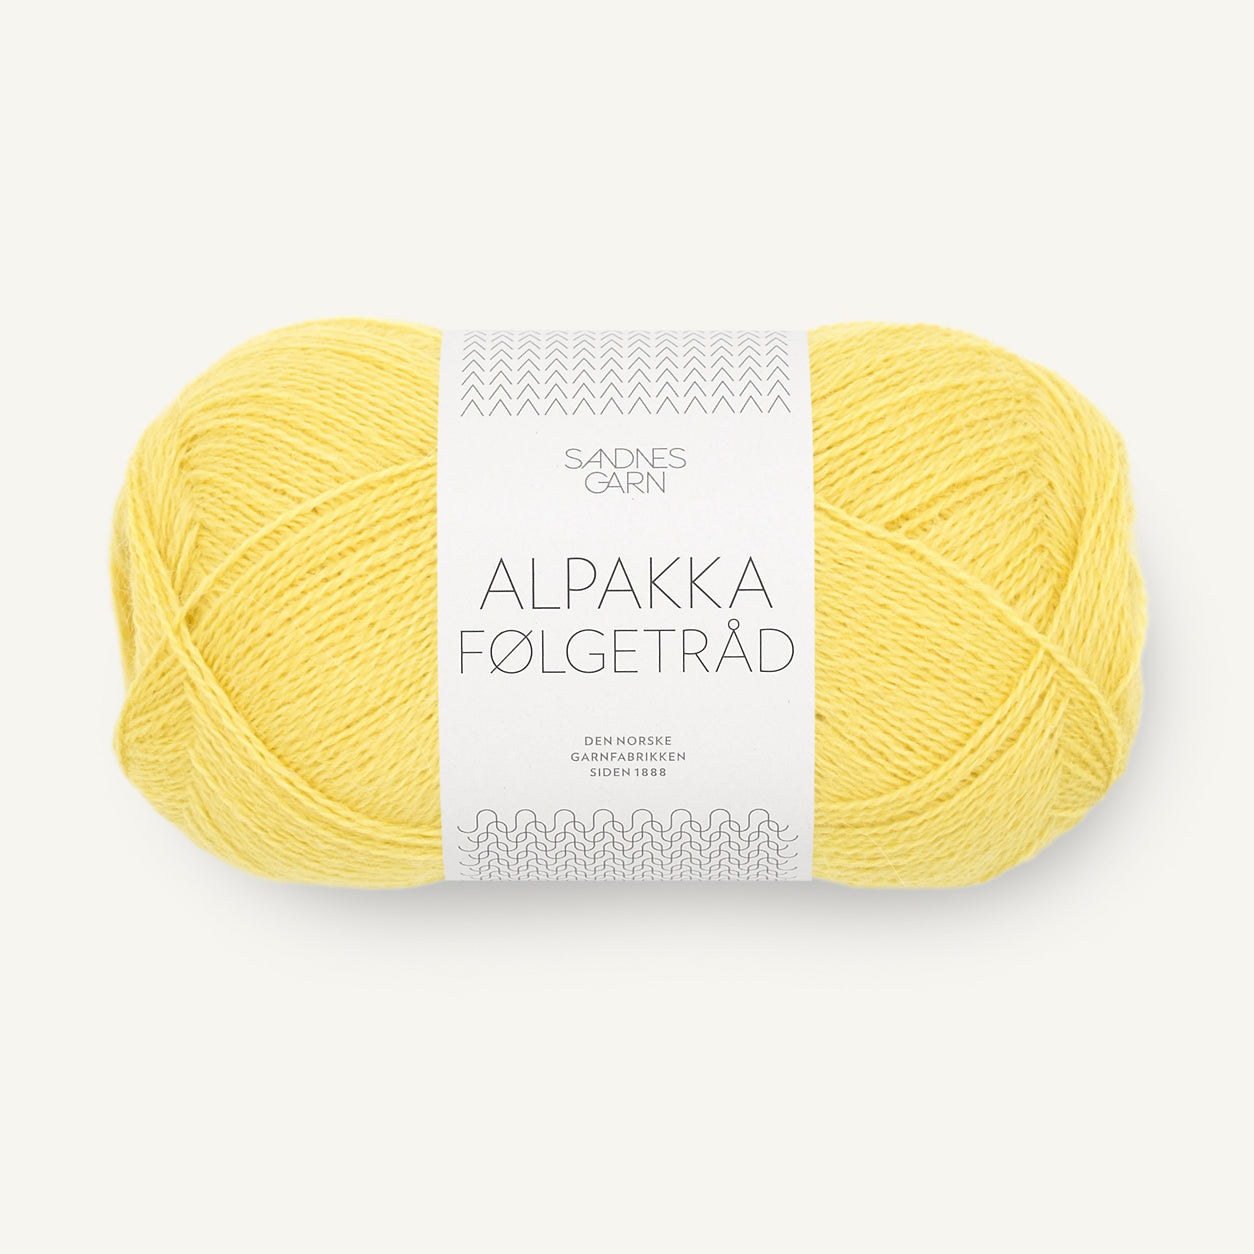 Alpakka Følgetråd lemon [9004]